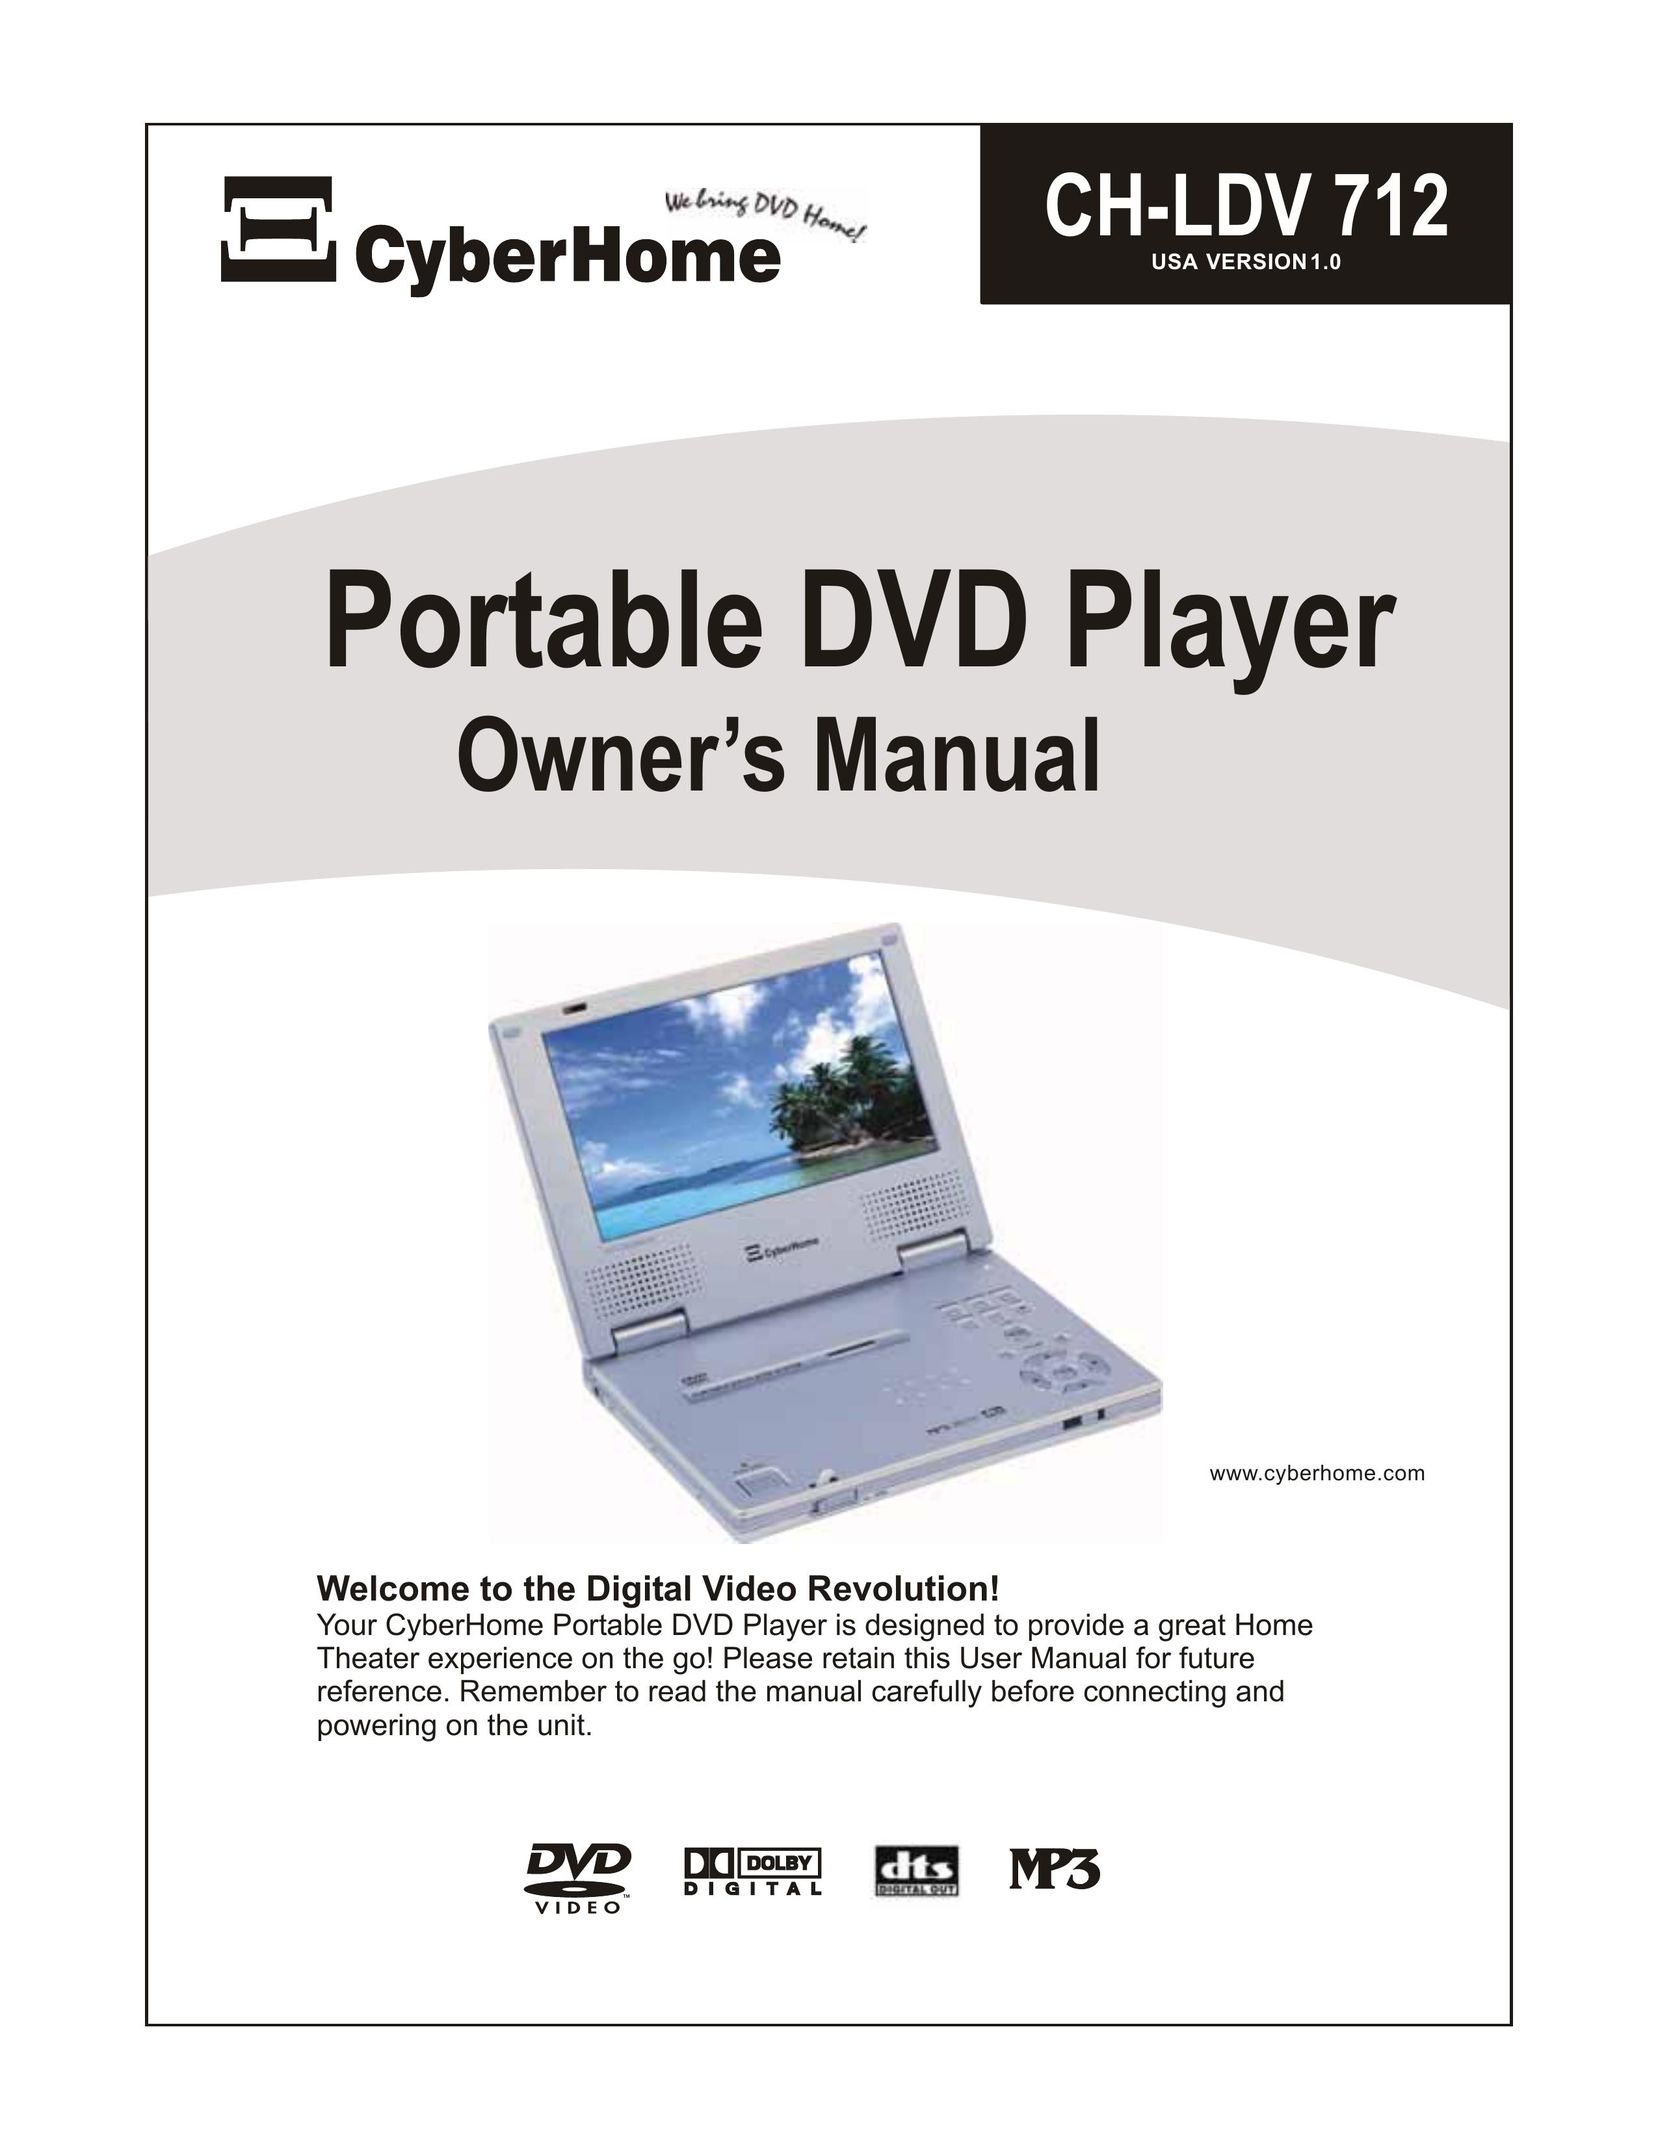 CyberHome Entertainment CHLDV712 Portable DVD Player User Manual